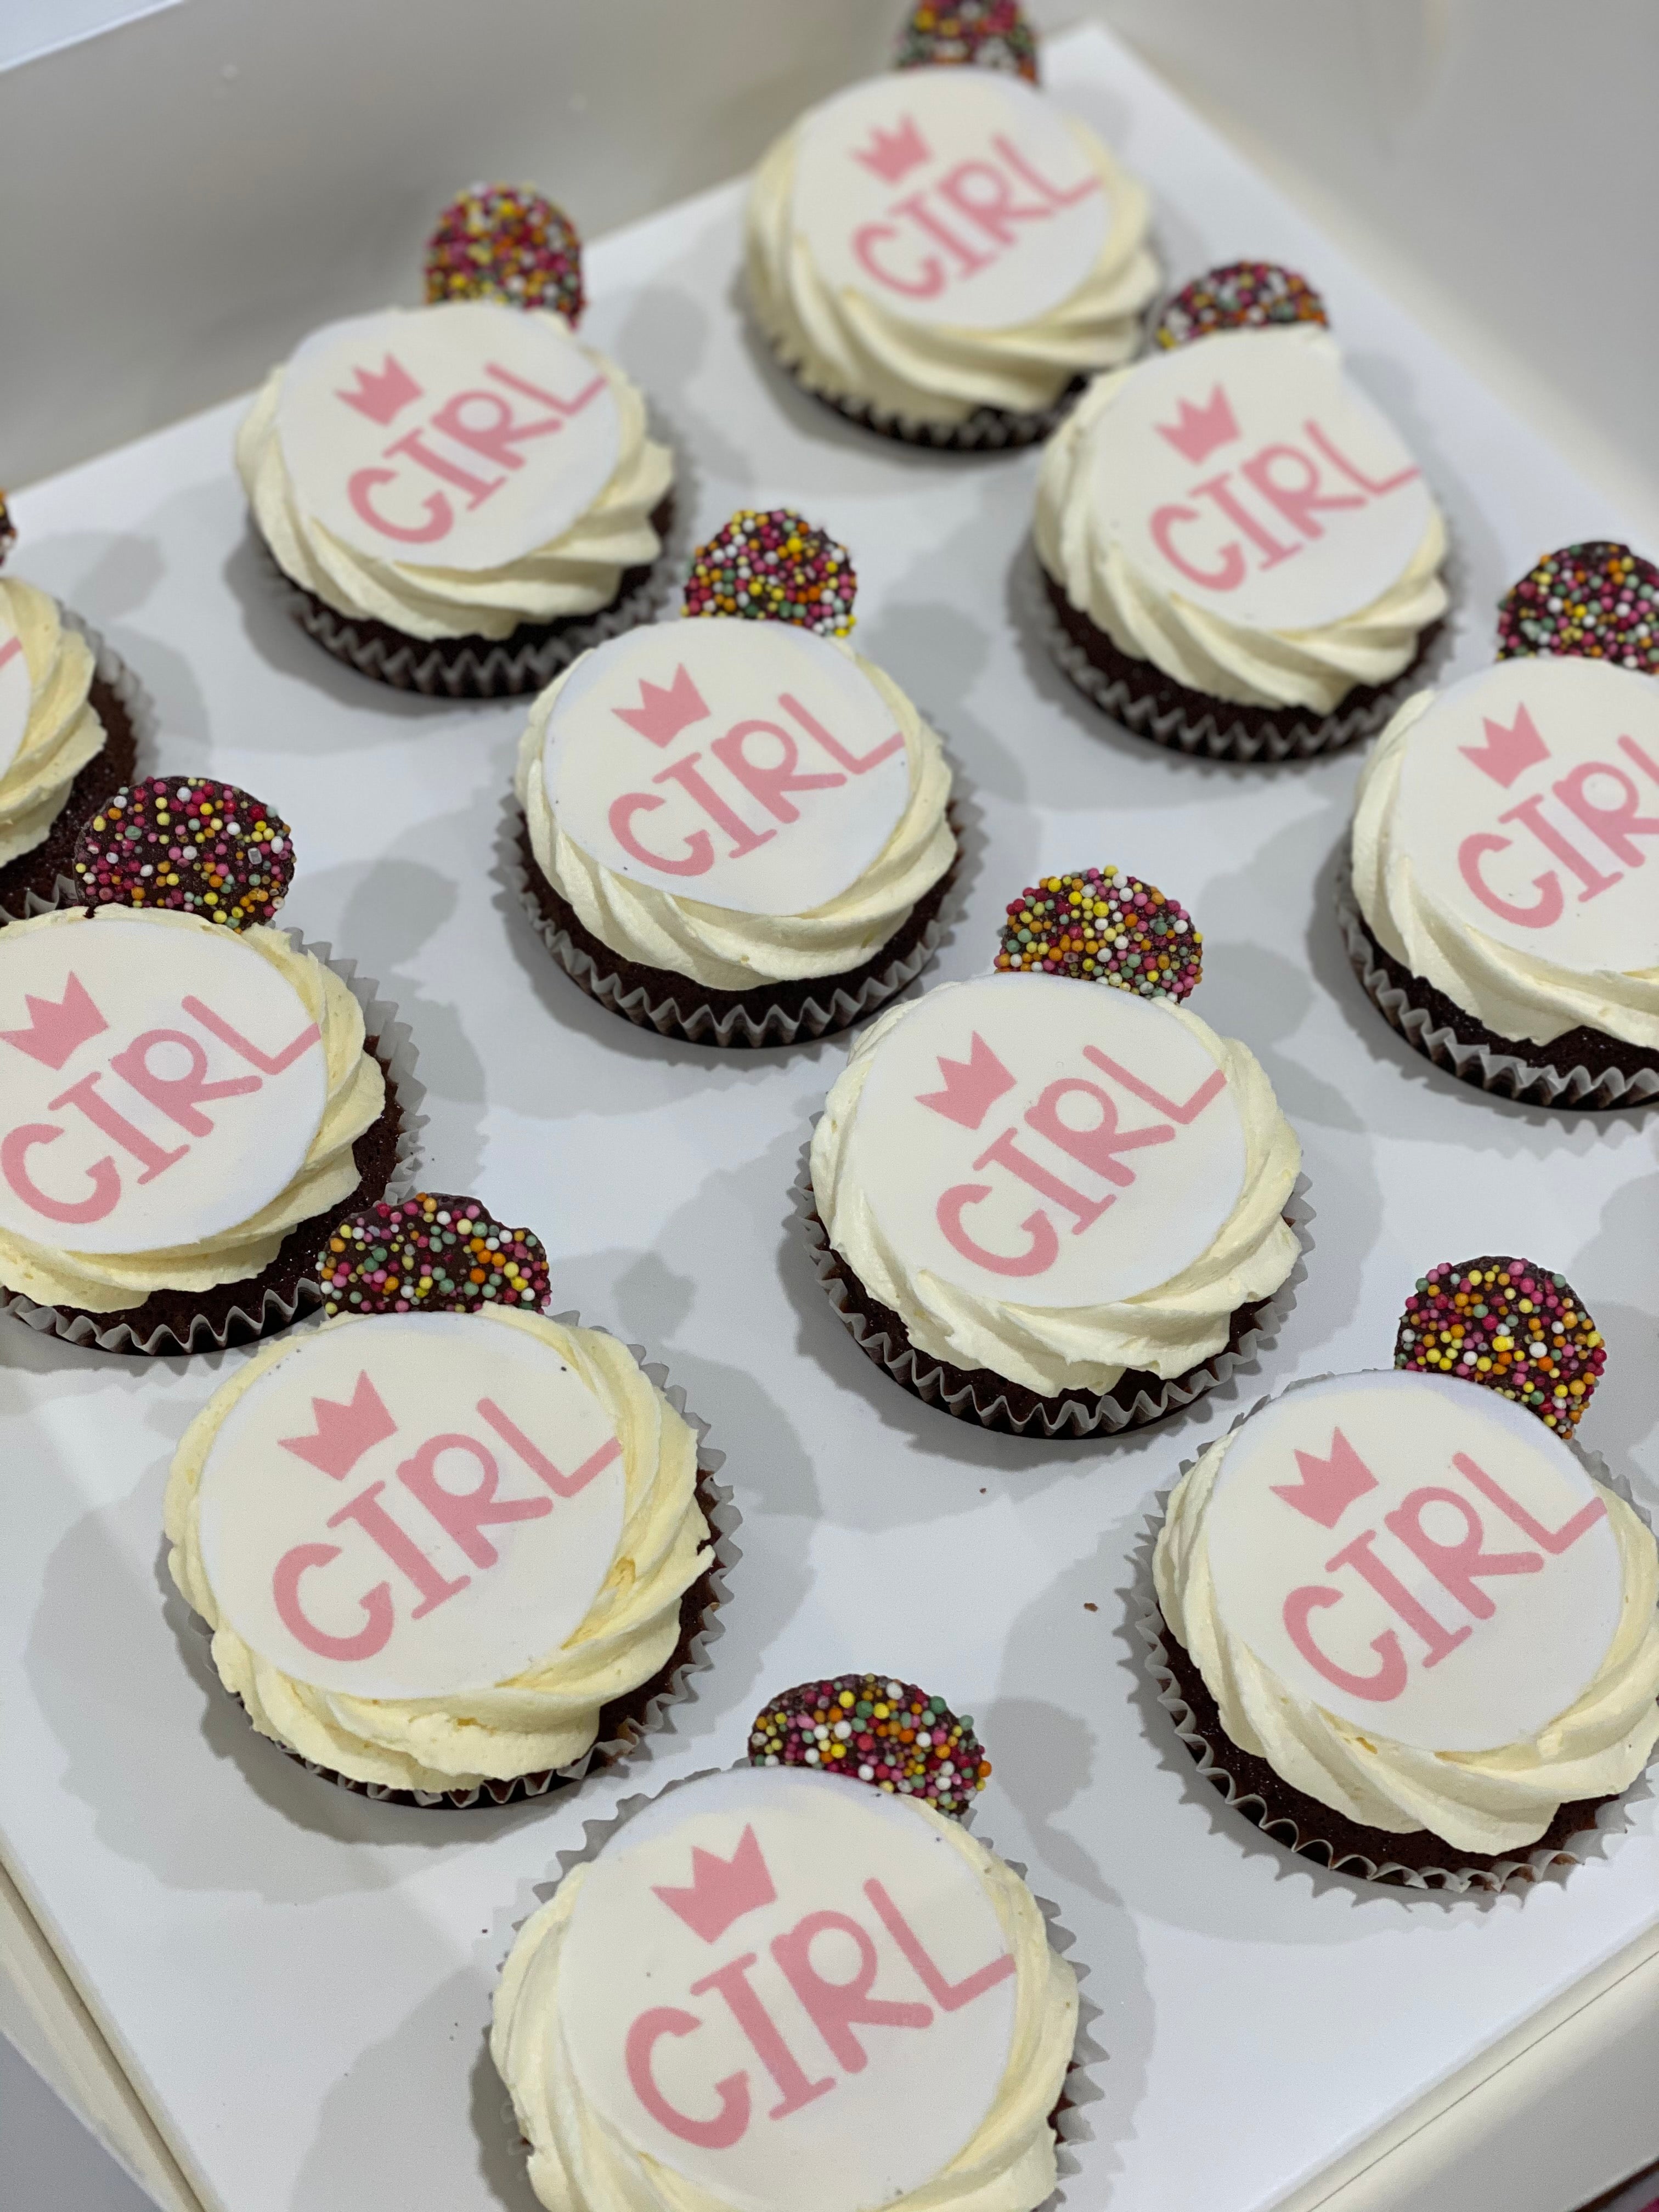 GIRL - 12 cupcakes